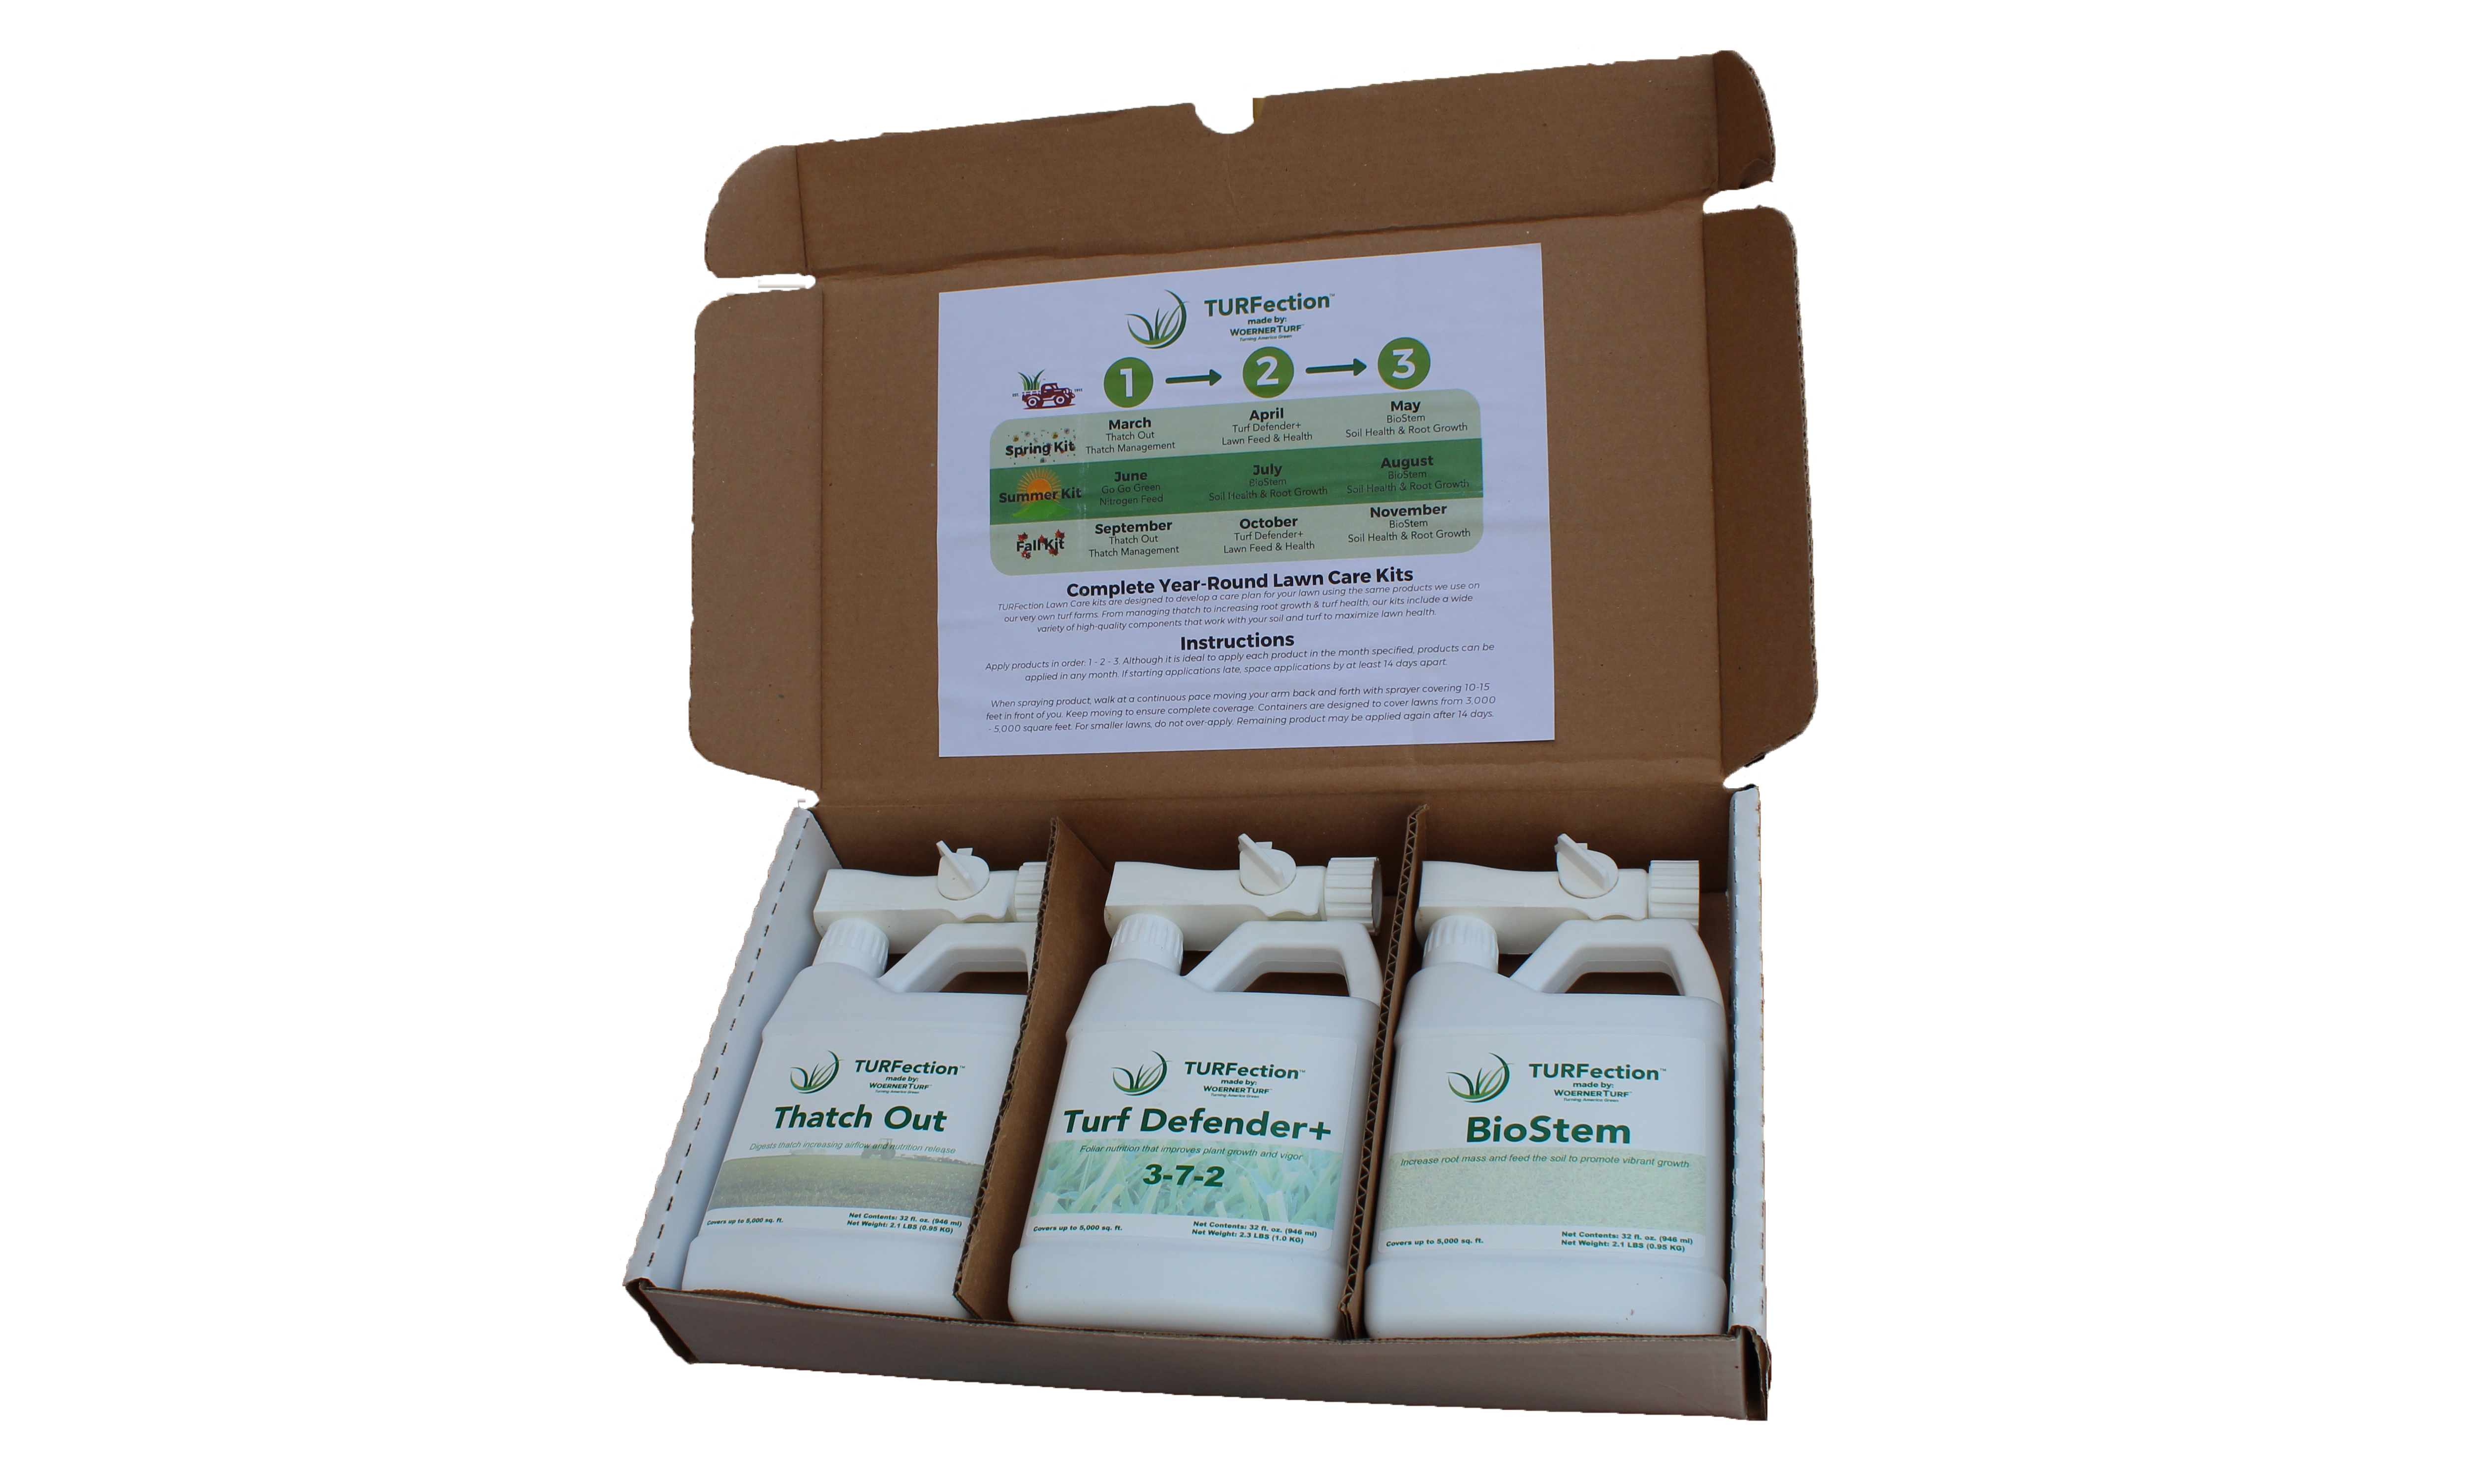 TURFection Spring Fertilizer Kit